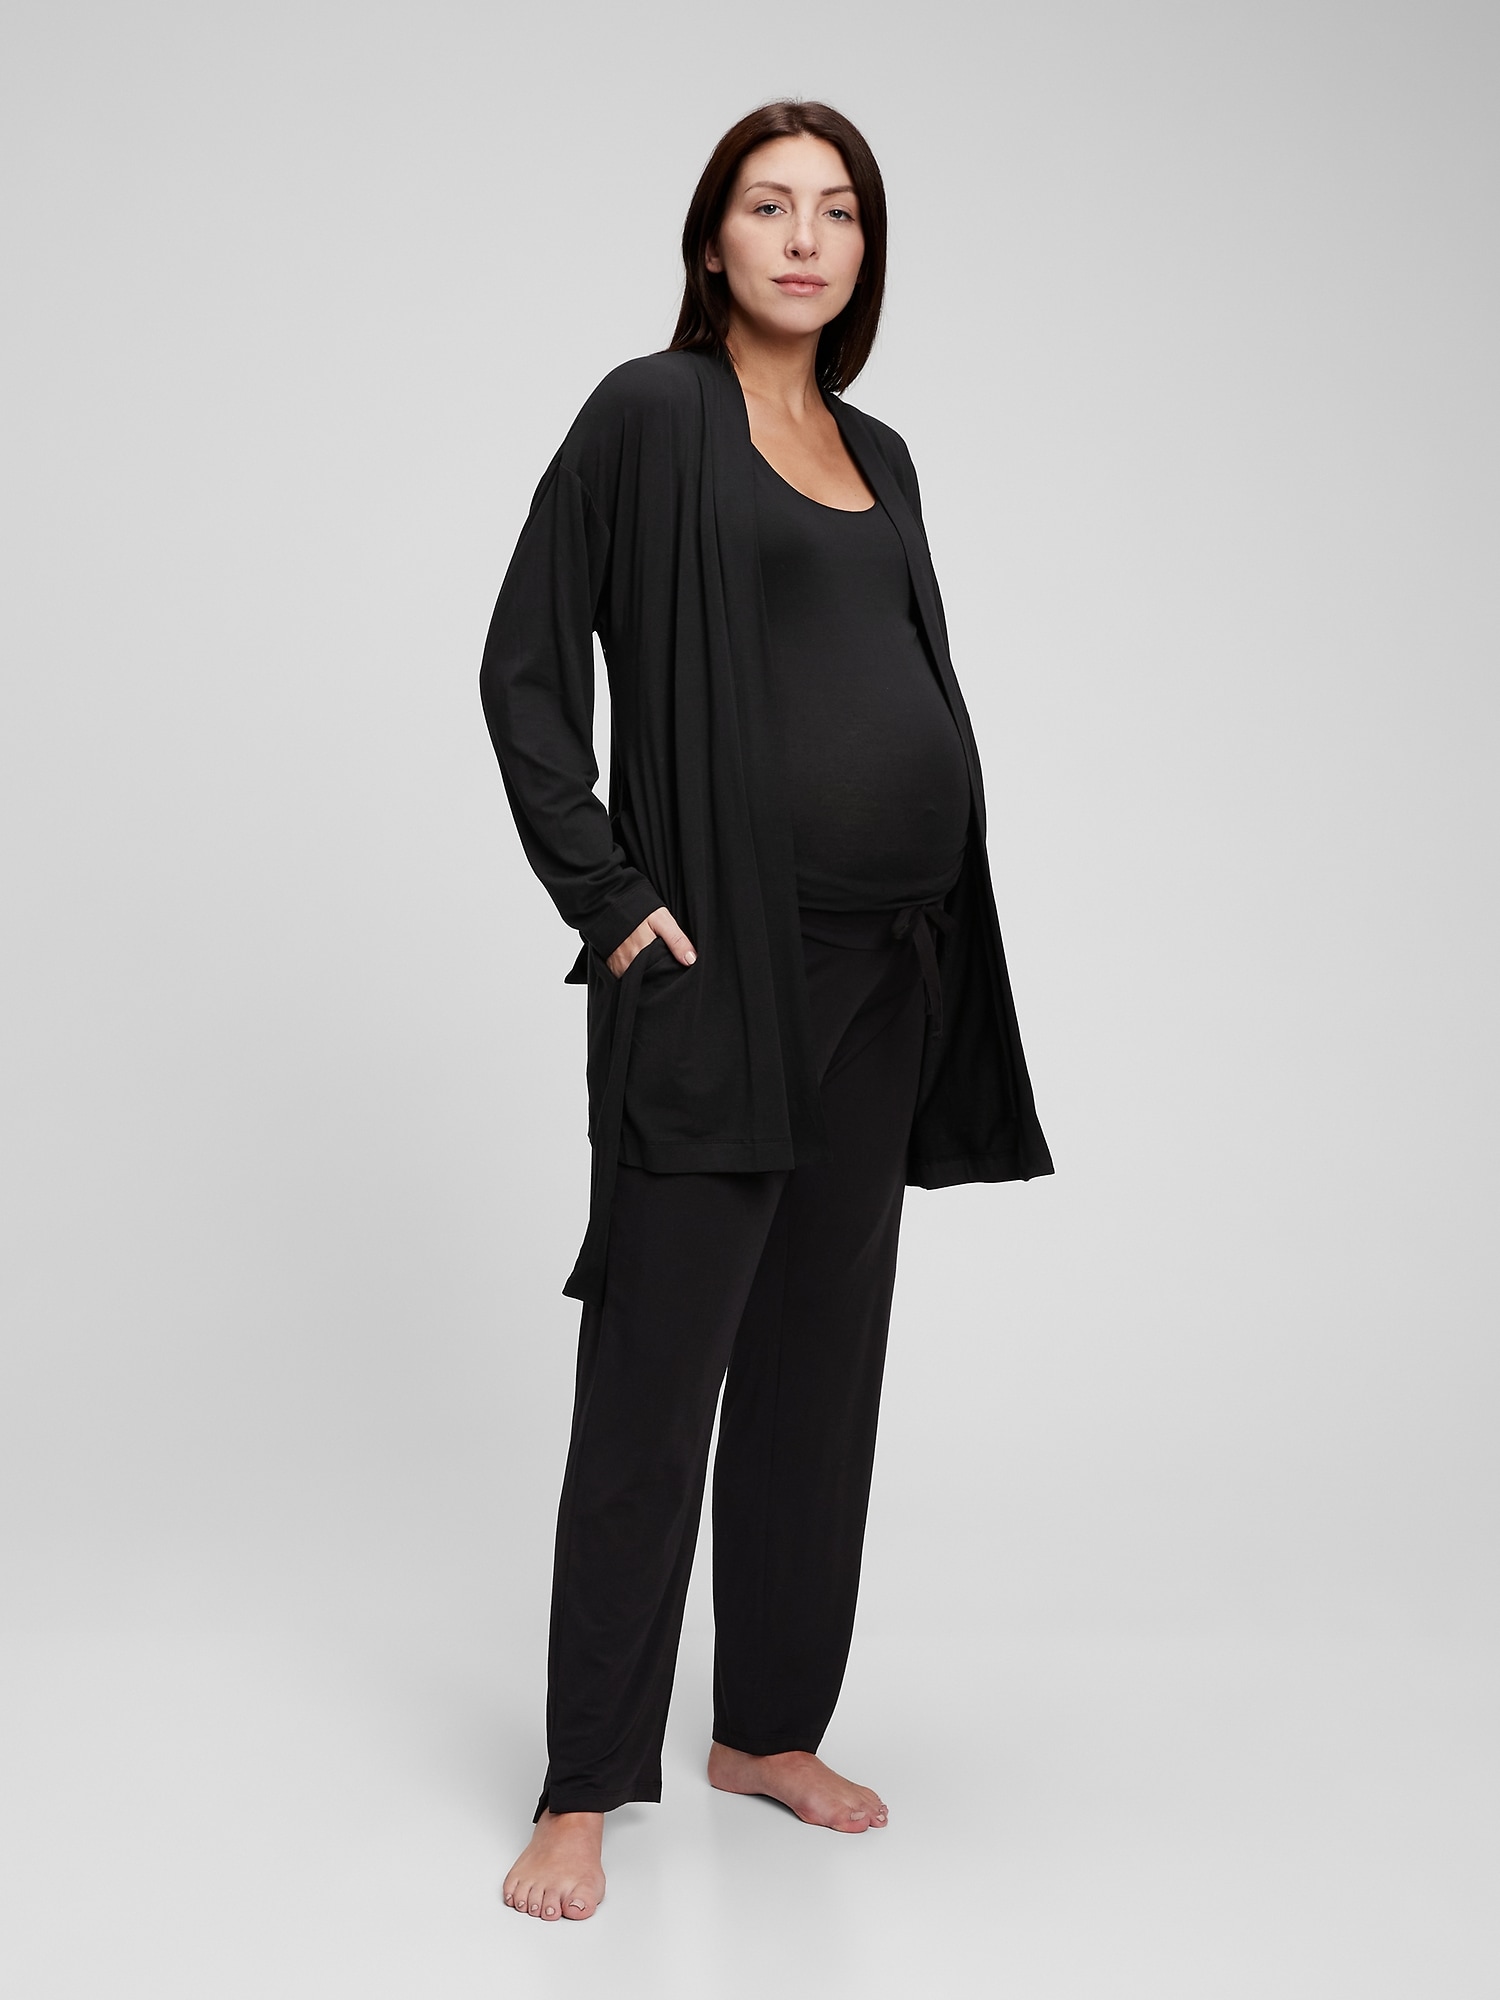 Gap Maternity Modal 3-piece Set In Black